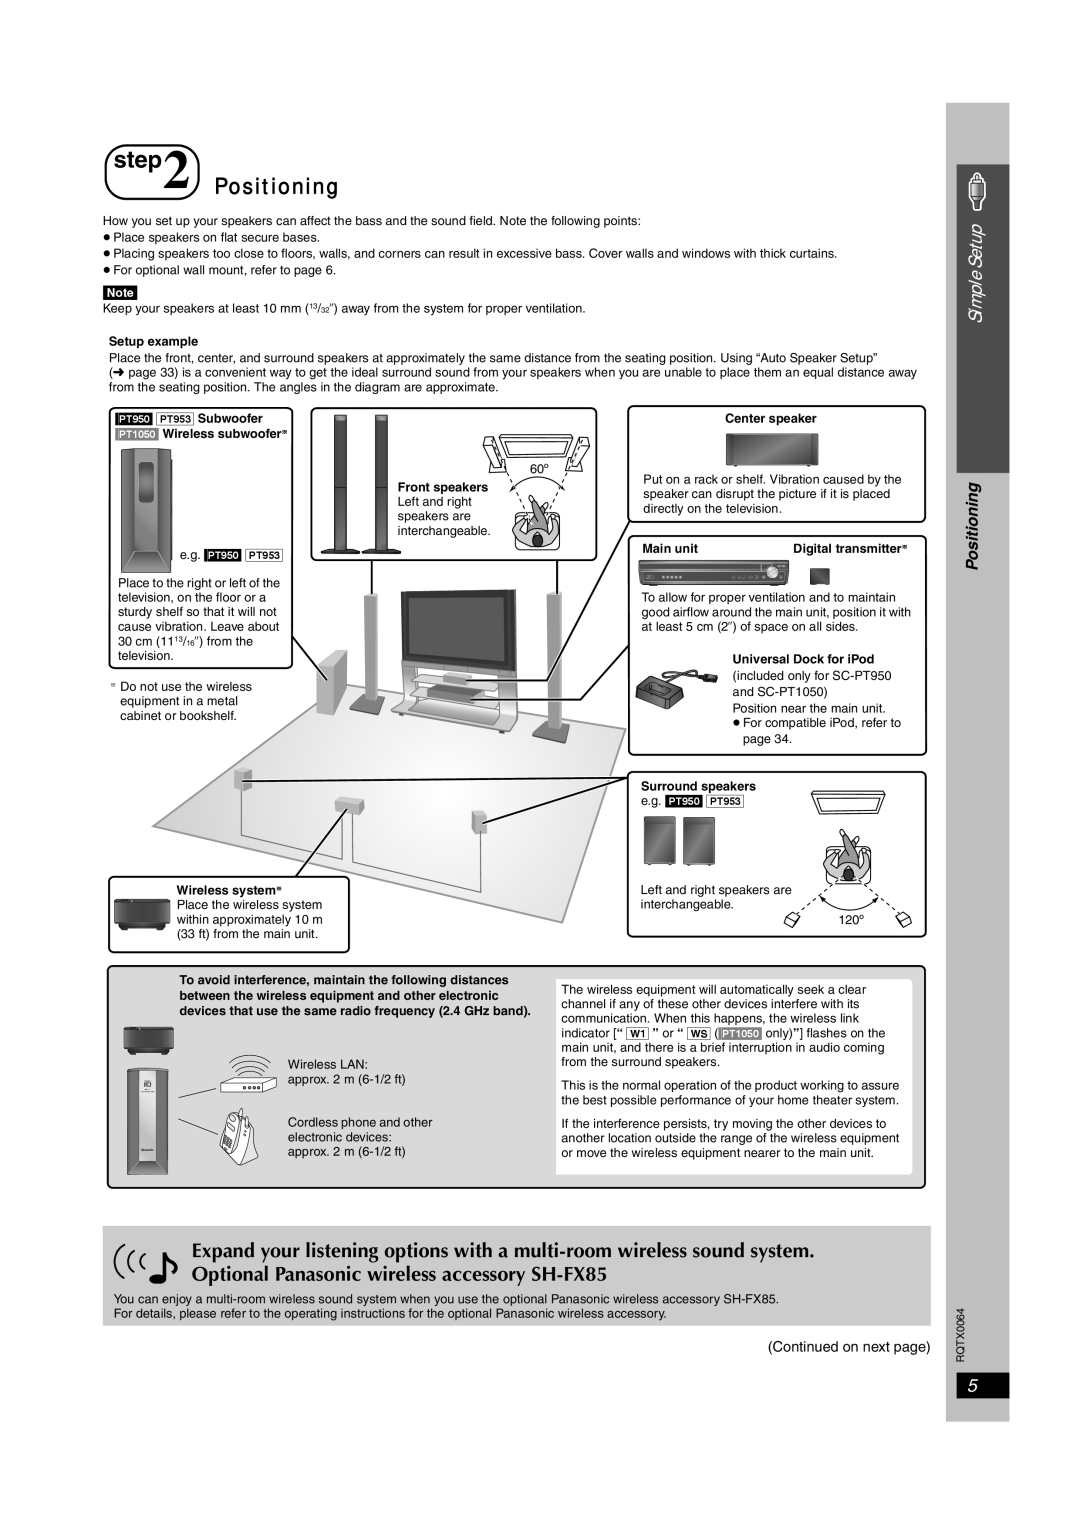 Panasonic SCPT1050, SCPT950, SC-PT953 Positioning, Simple Setup, Continued on next page, e.g. PT950 PT953 